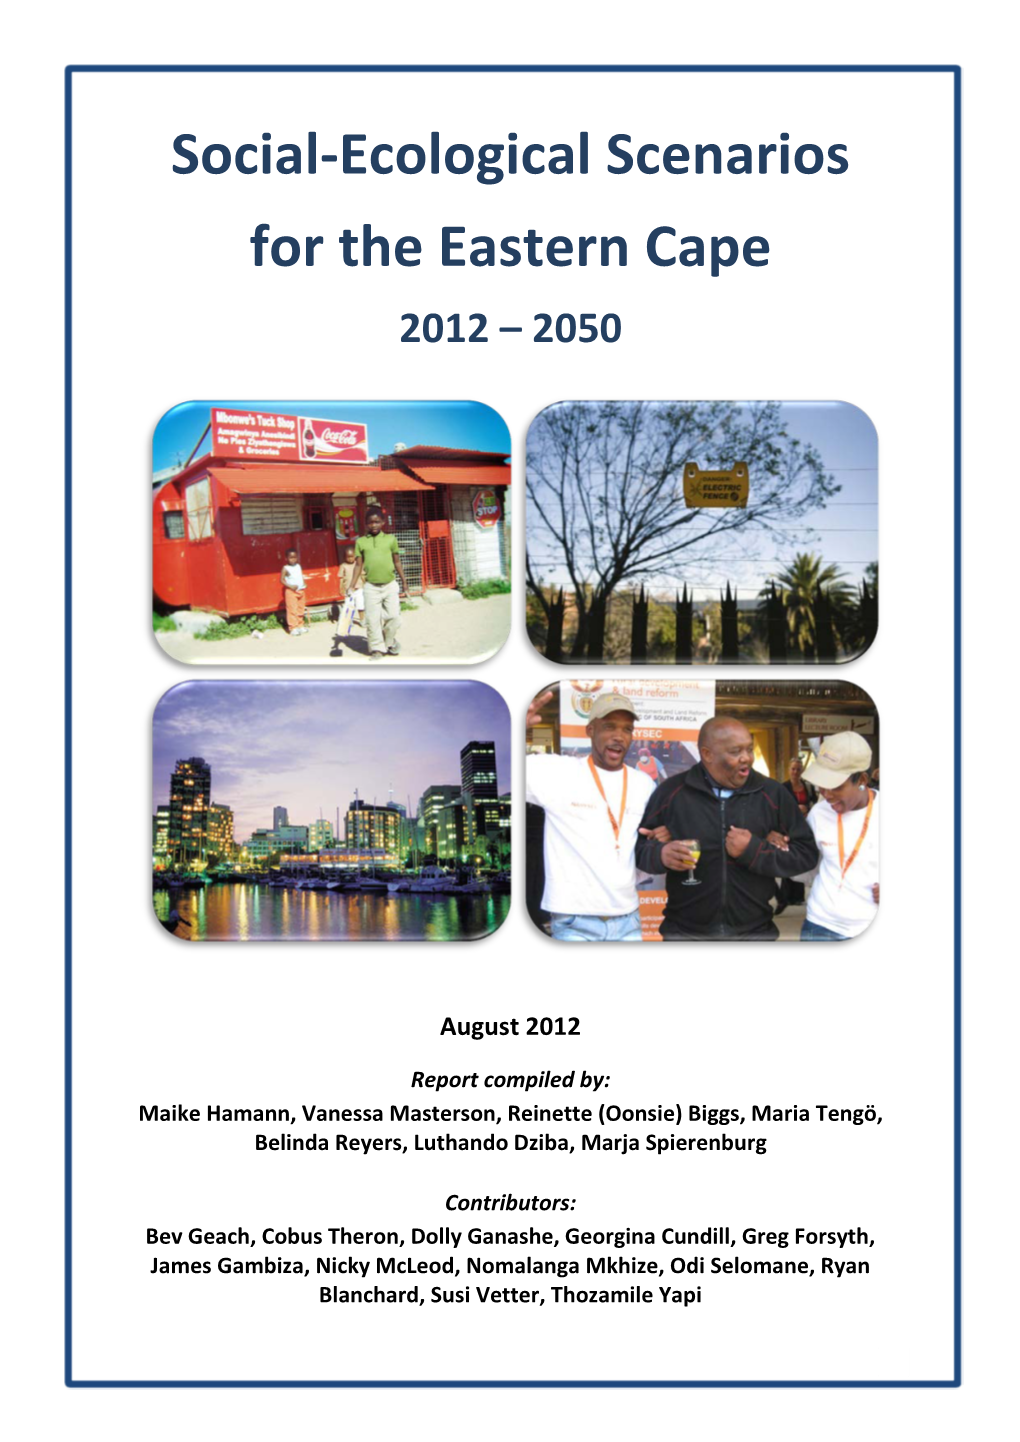 Social-Ecological Scenarios for the Eastern Cape 2012-2050